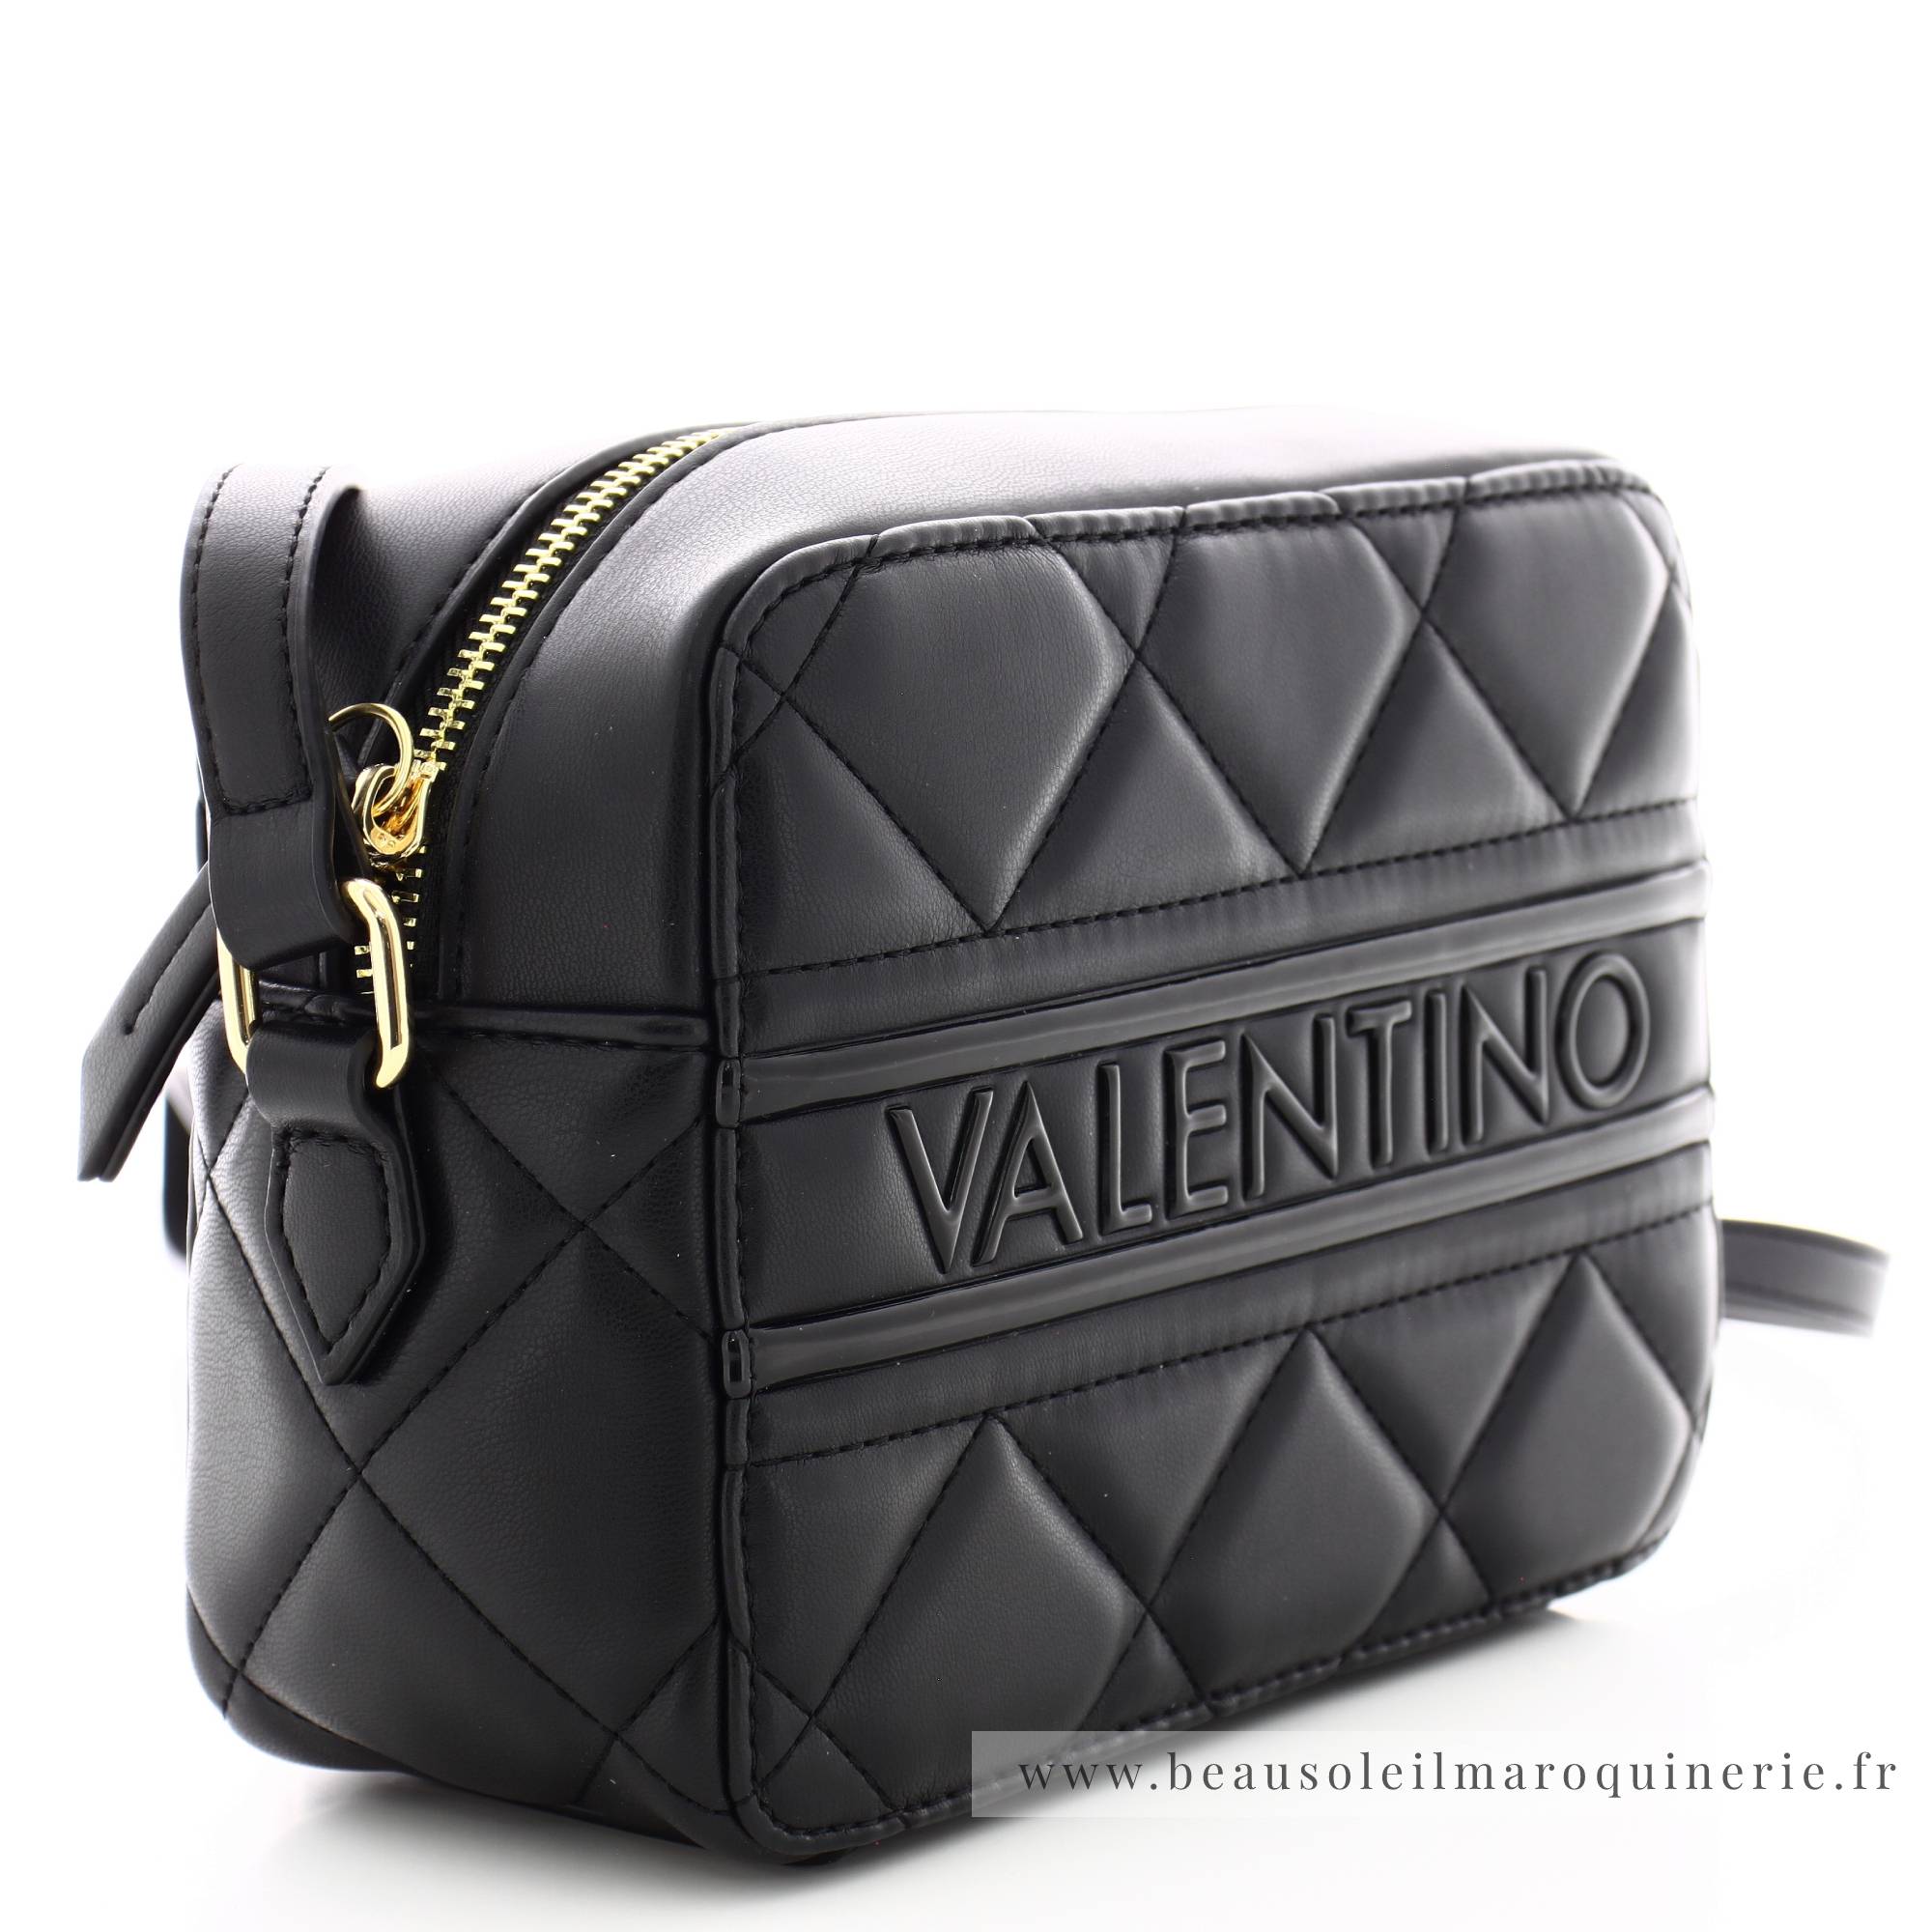 Sac camera Valentino Bags au design matelassé VBS51O06 001 couleur noir vue de profil